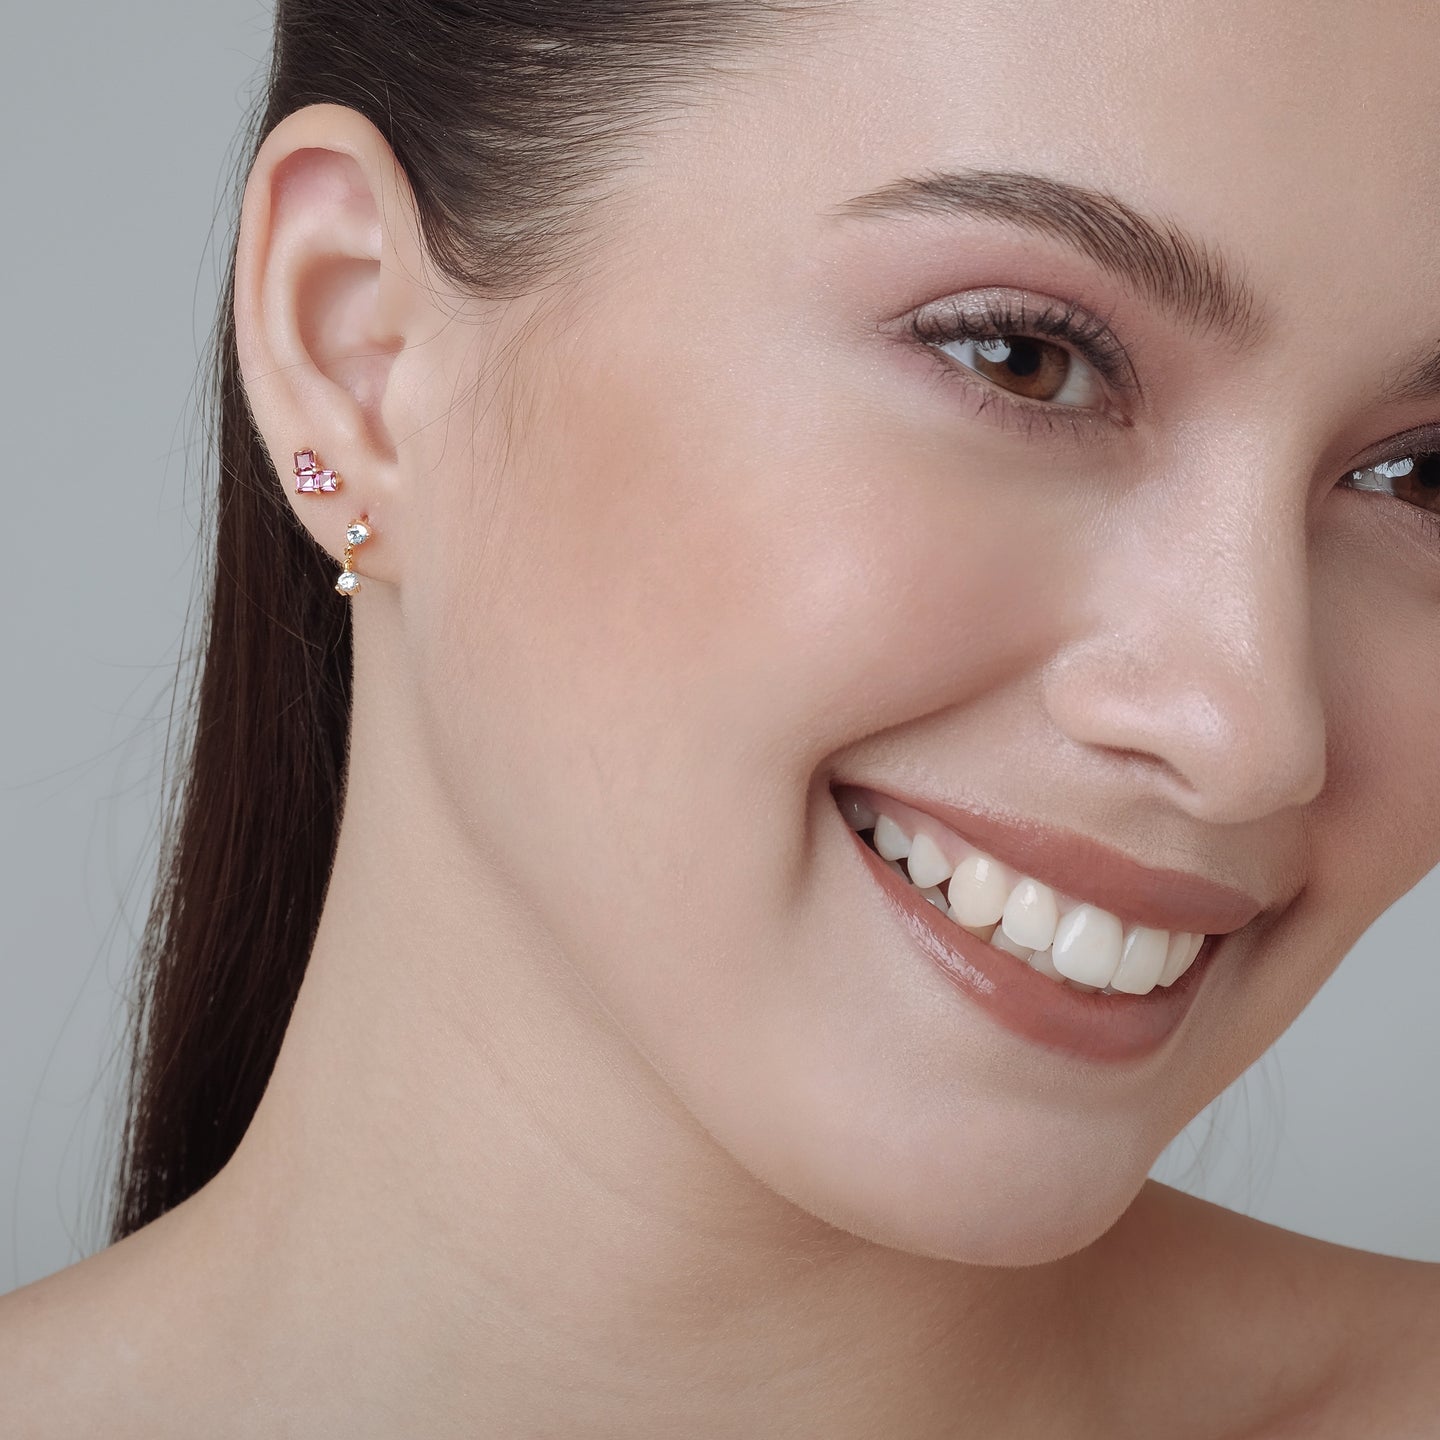 products/nadi-cz-stud-earrings-18k-gold-vermeil-3.jpg